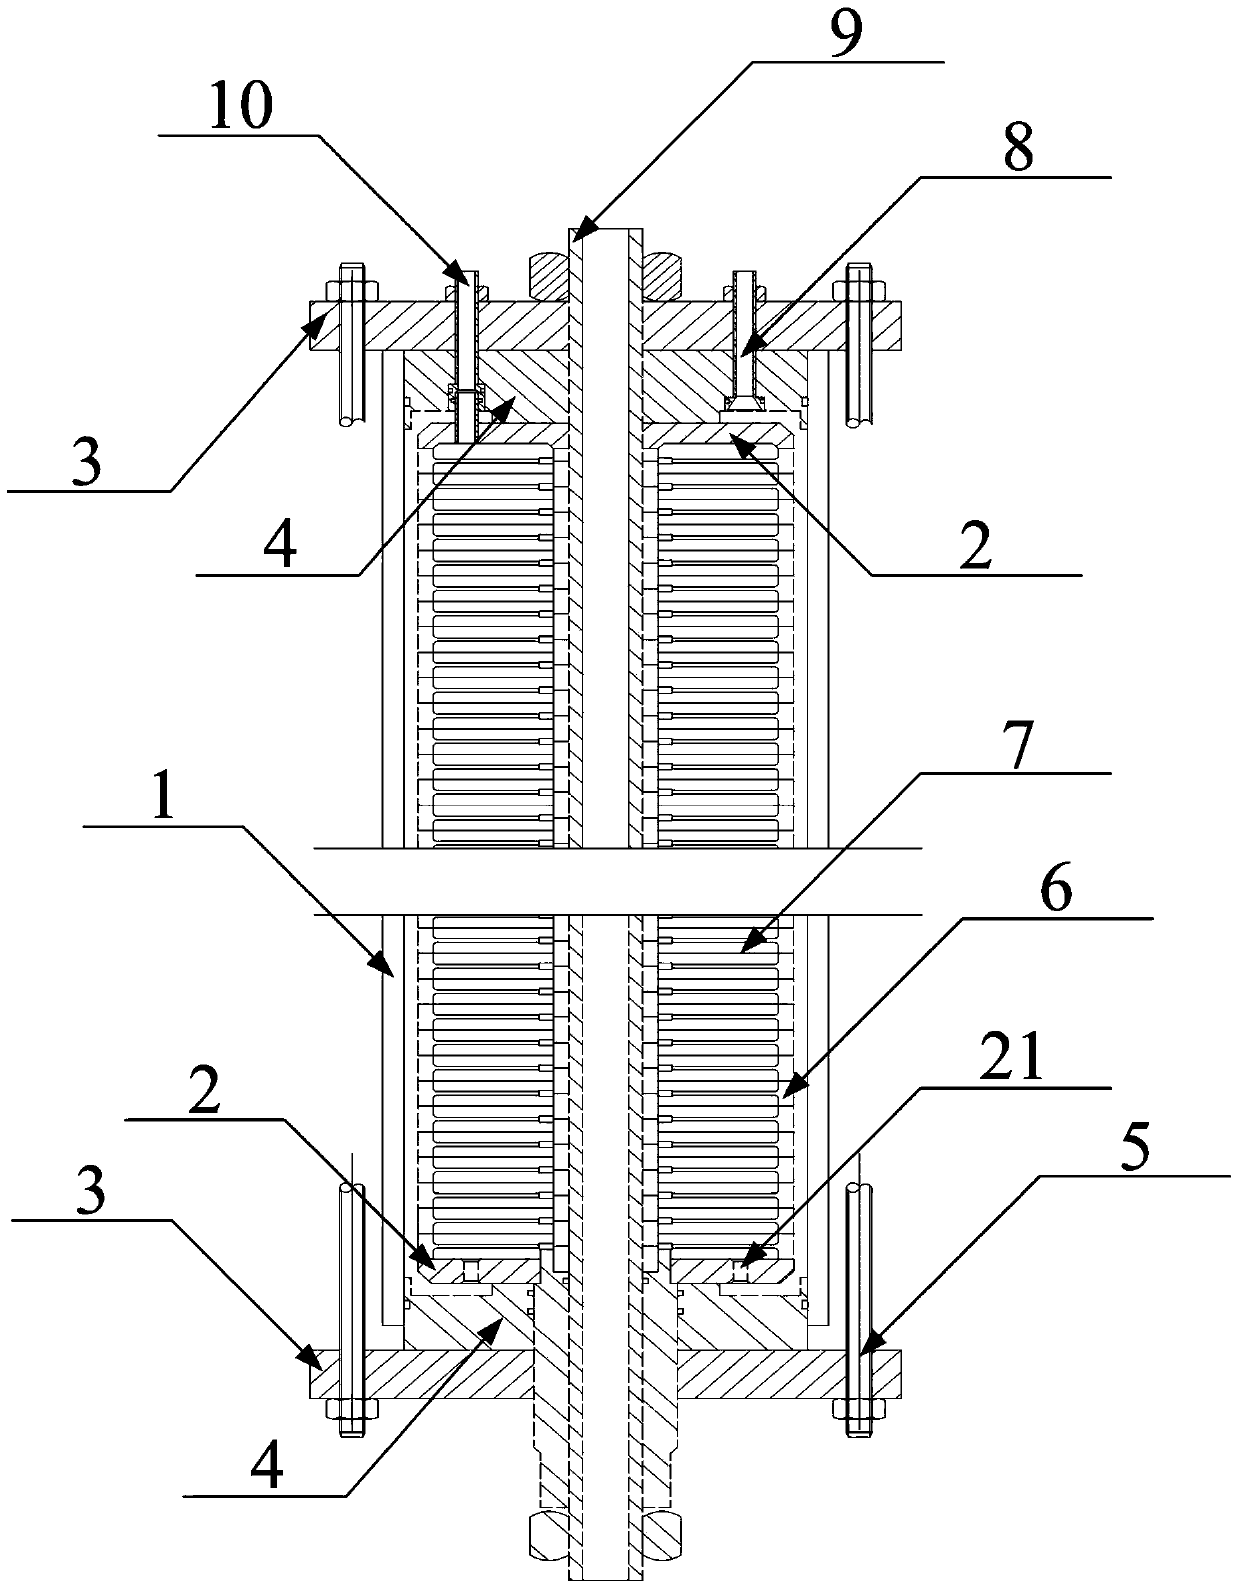 Separating and filtering membrane column